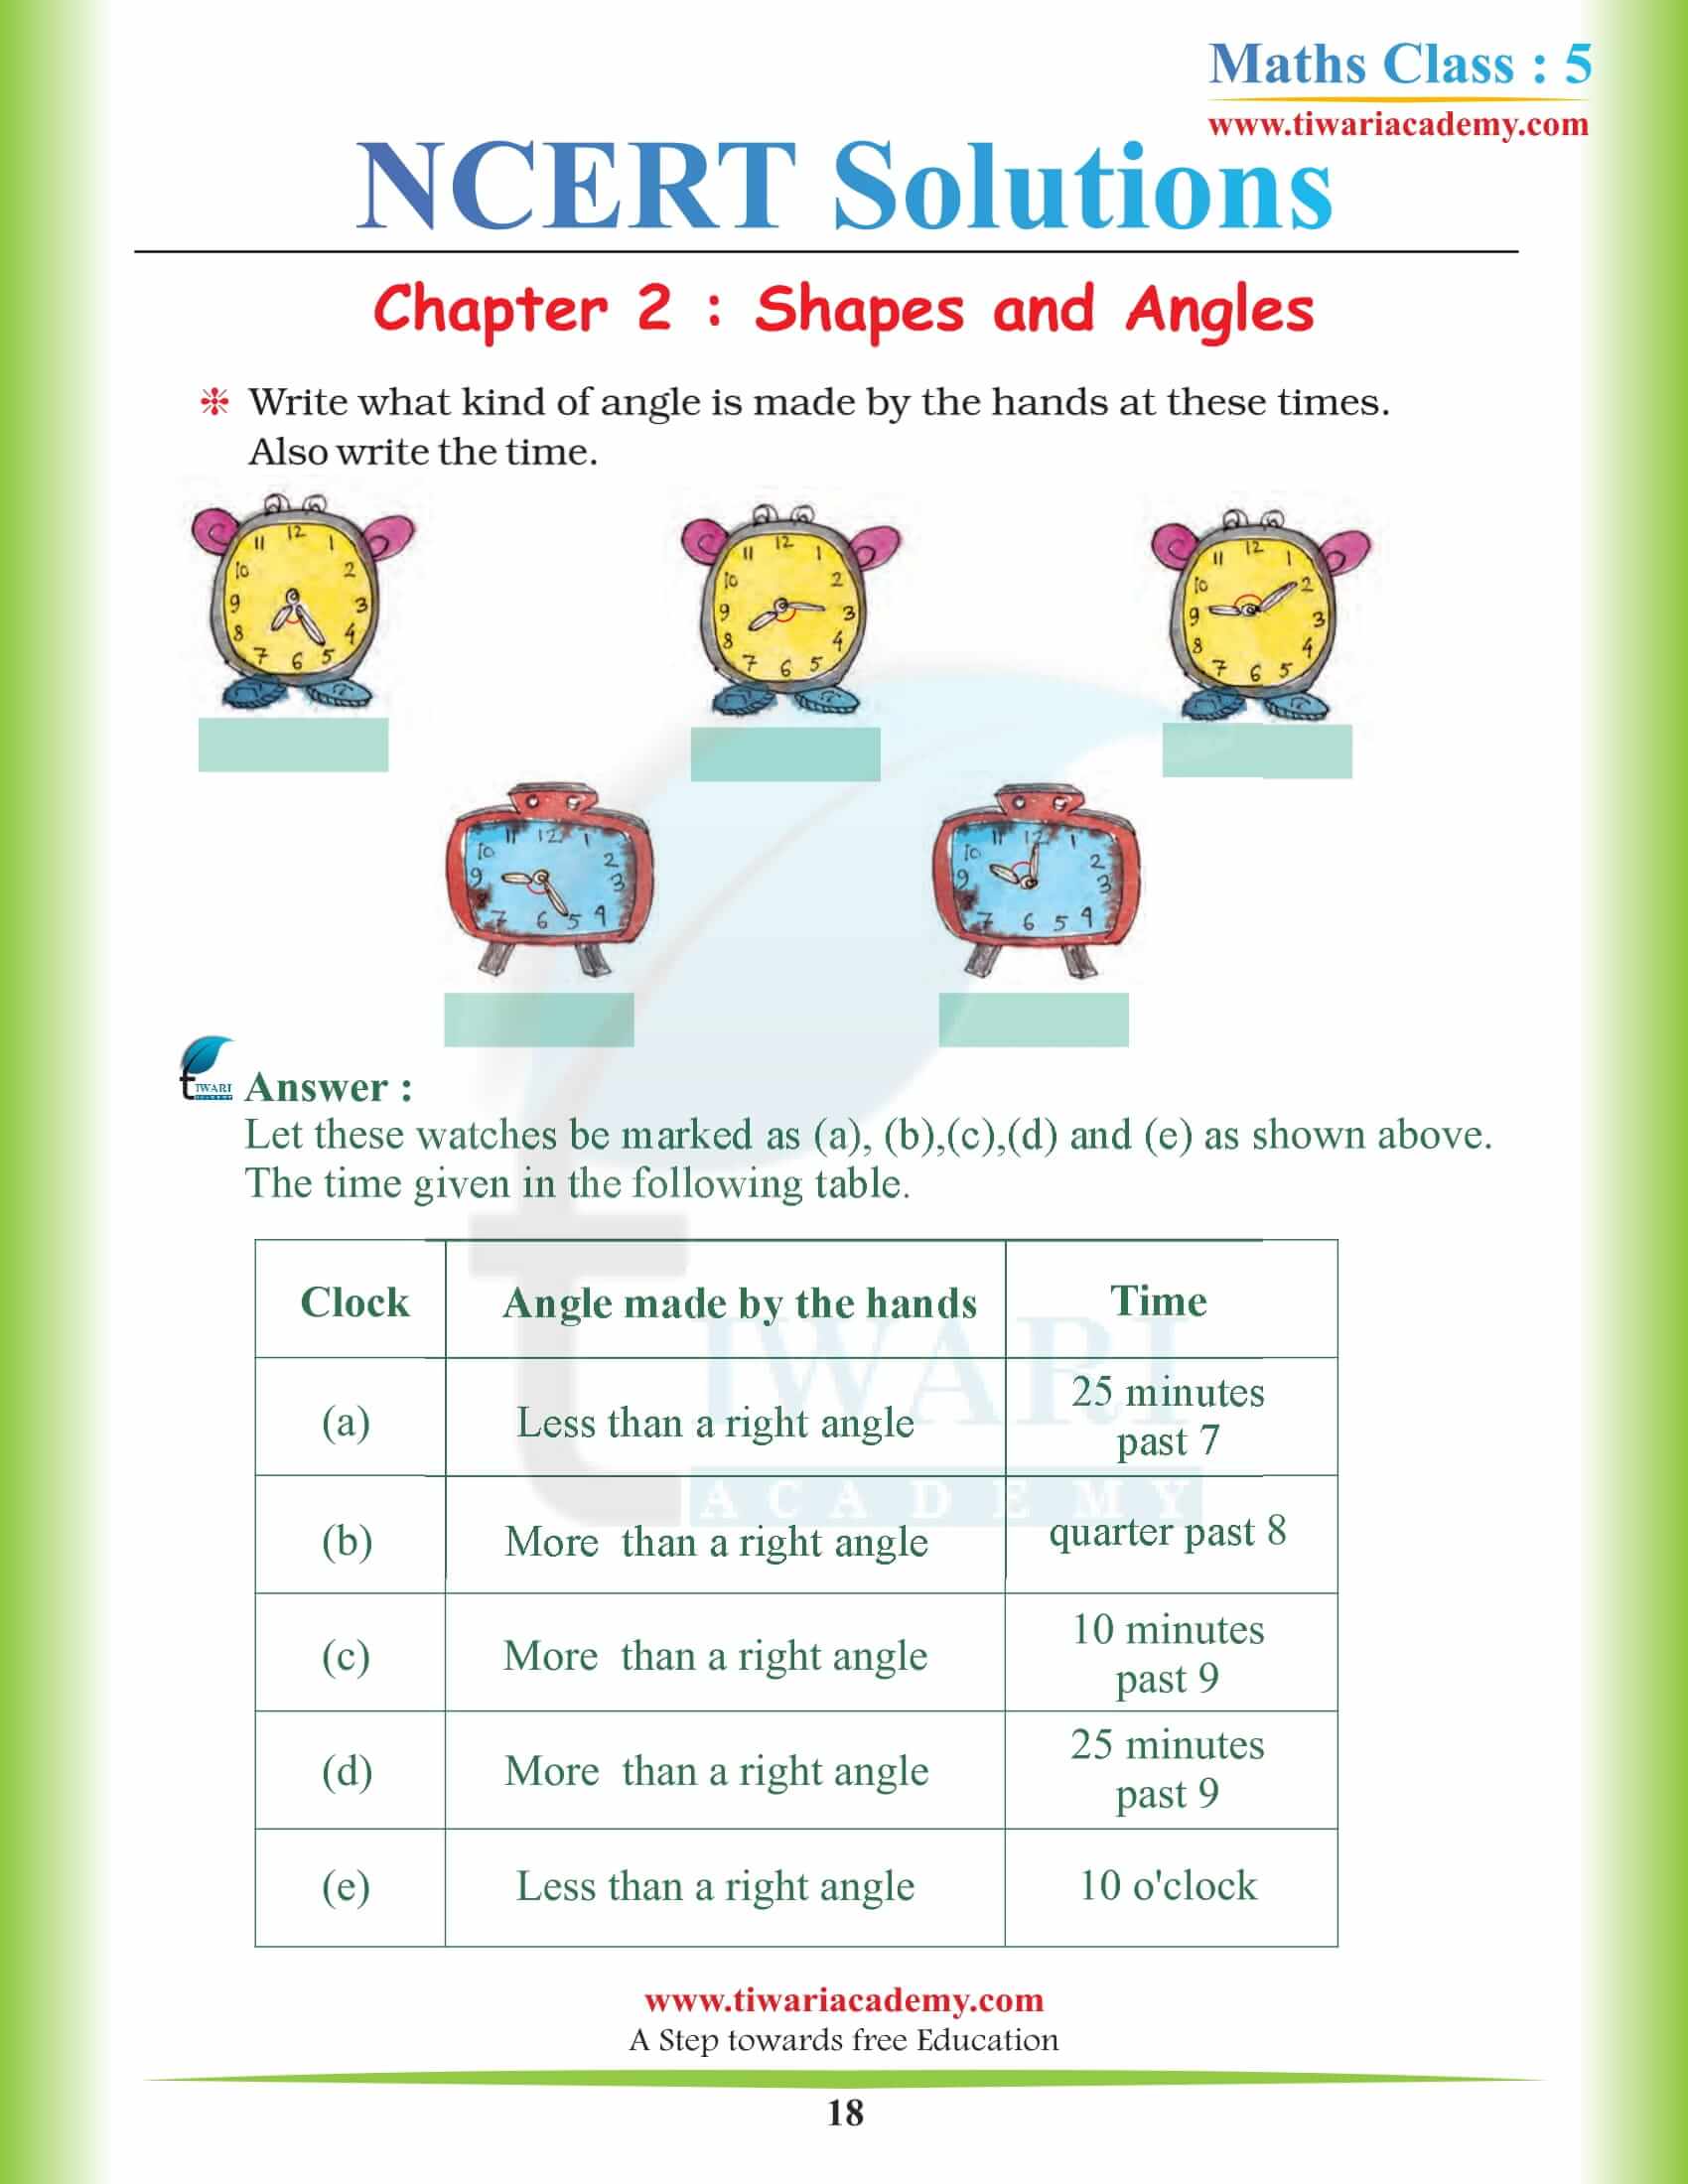 Class 5 Maths Magic Chapter 2 answers free